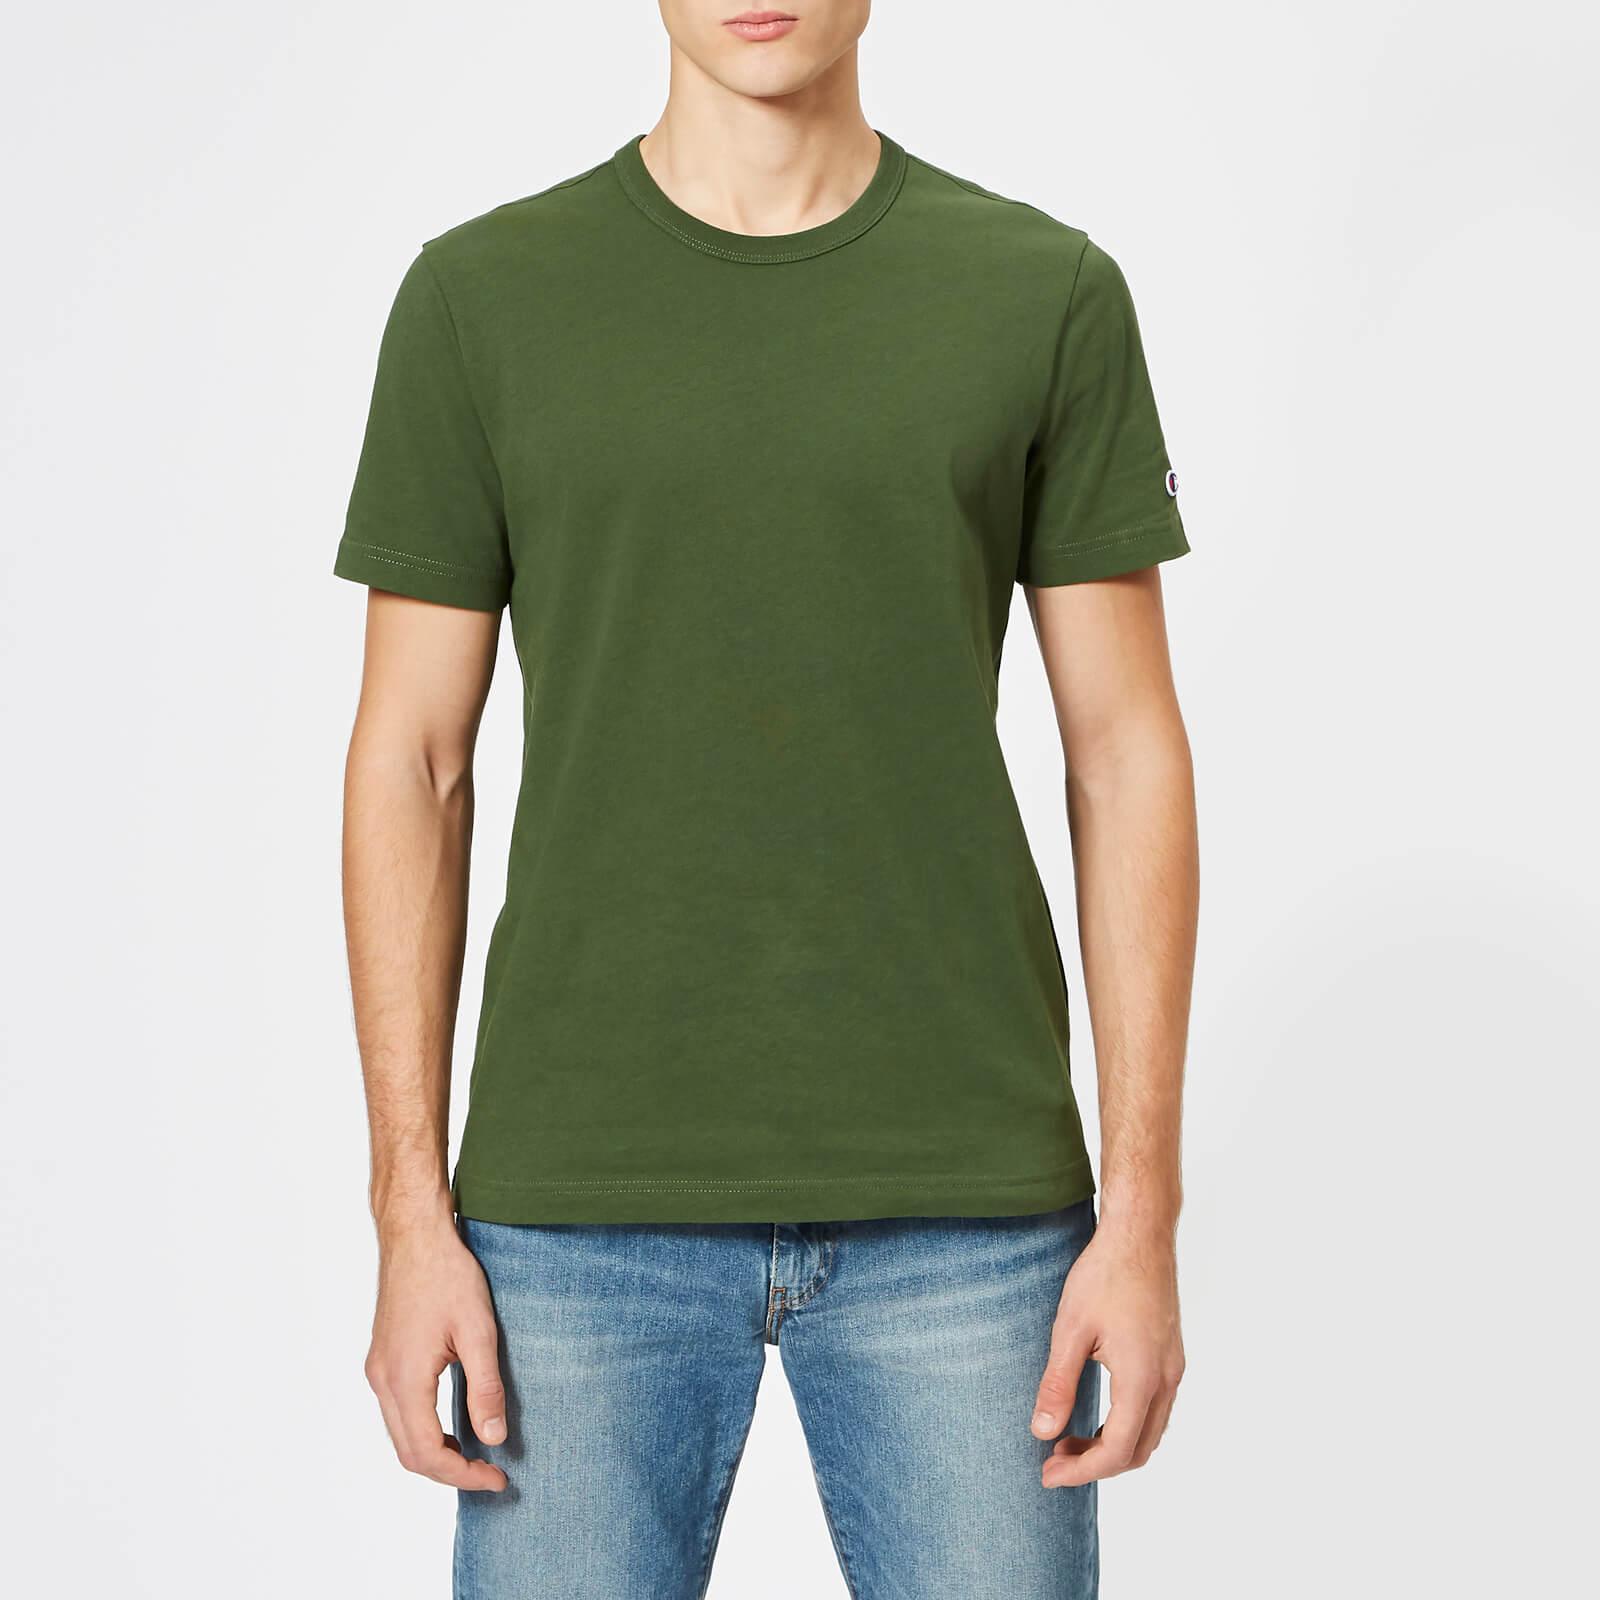 Champion Sleeve Logo T-shirt in Green for Men - Lyst